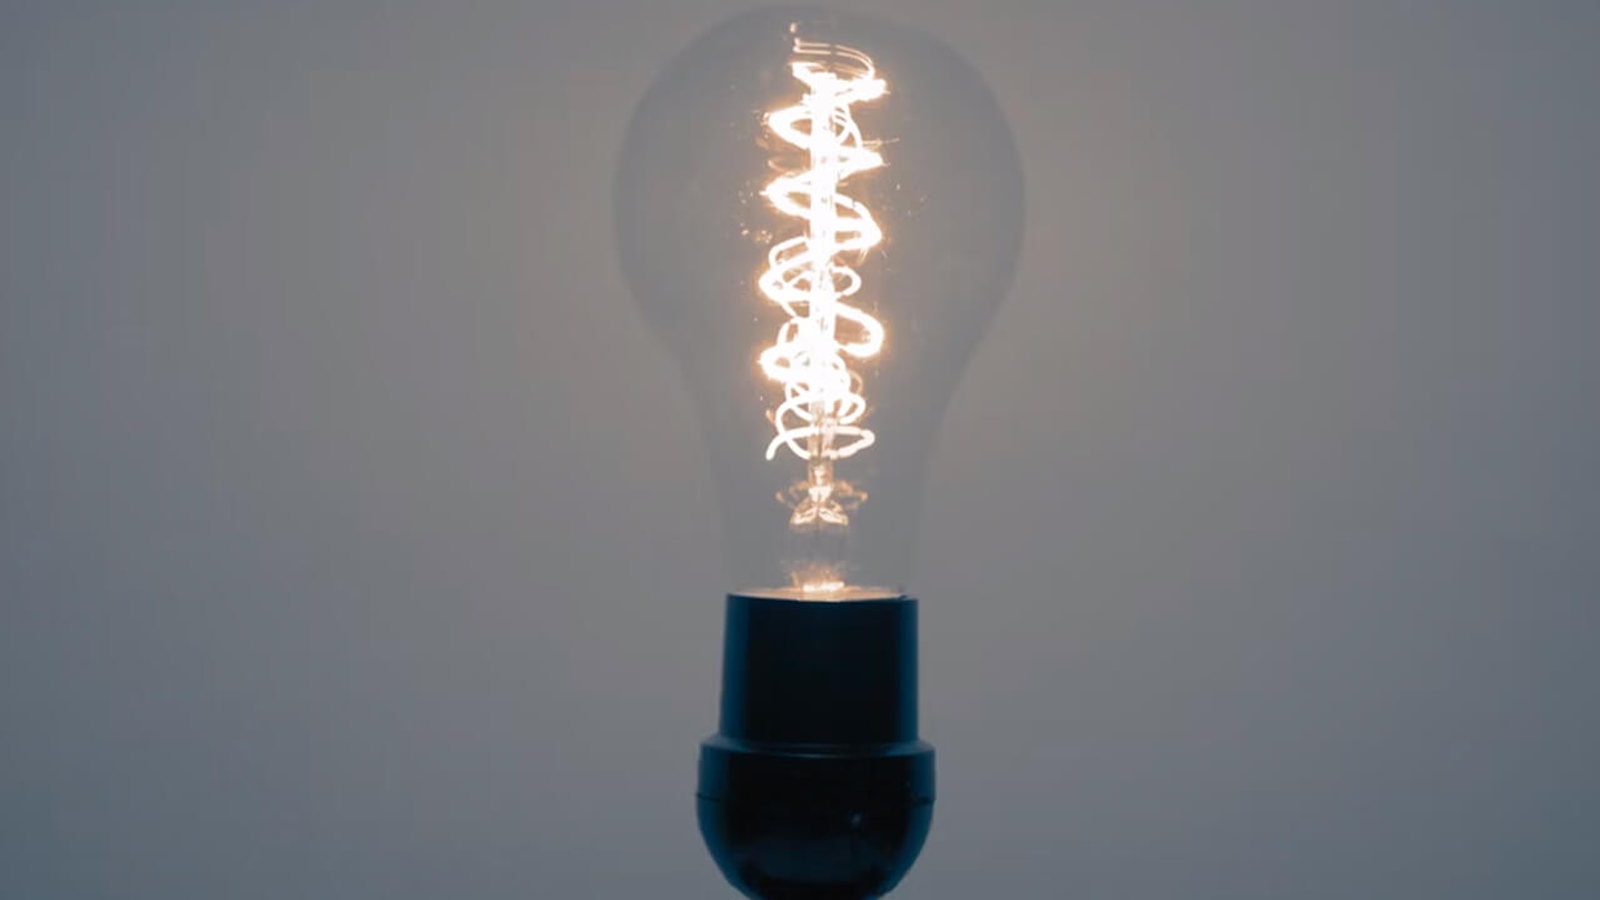 A lightbulb on a grey background